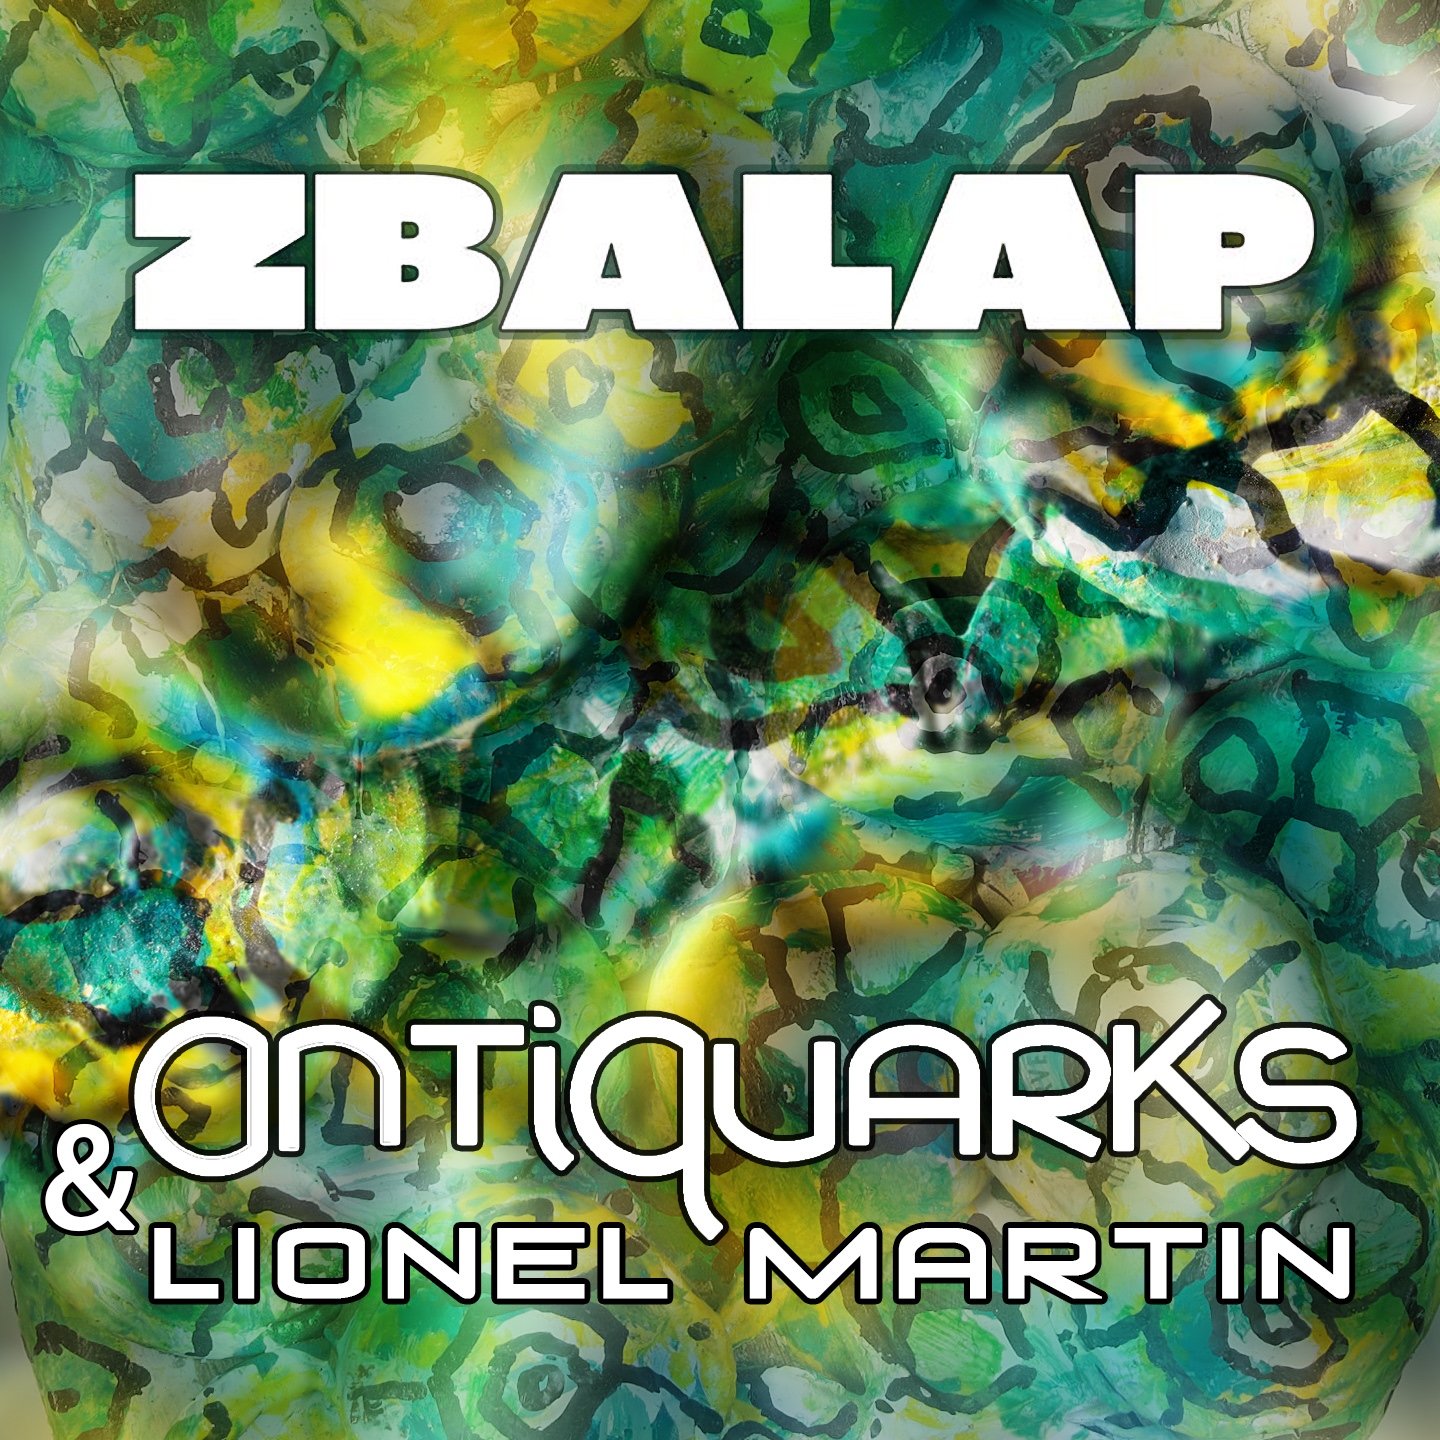 antiquarks pochette album ZBALAP